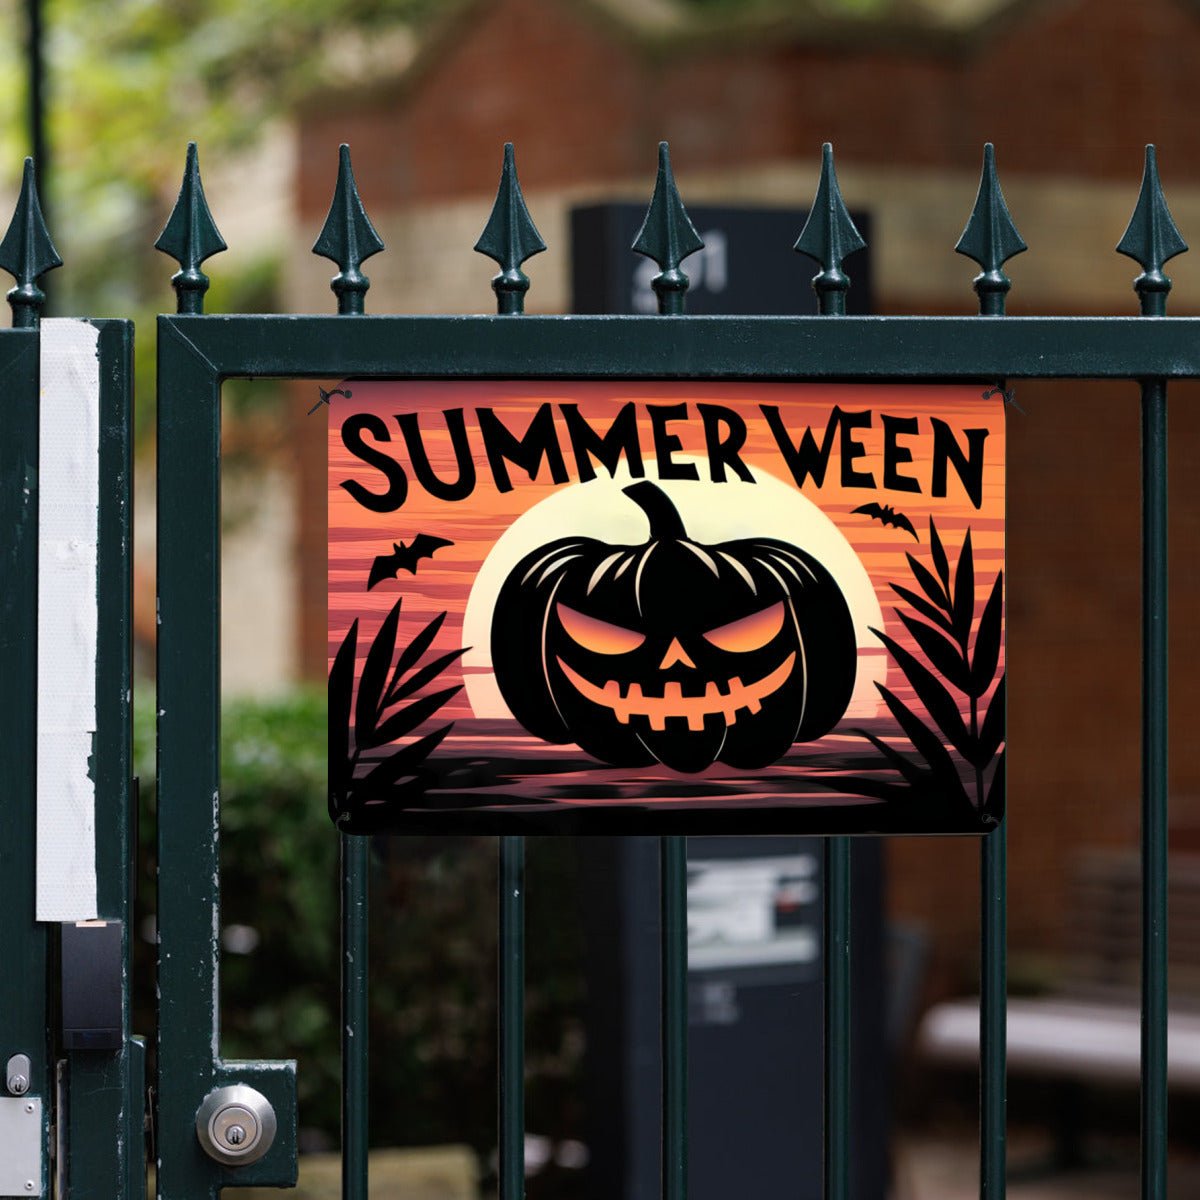 Summerween Pumpkin Metal SignHome DecorVTZdesignsWhite12 × 16 InchArt & Wall Decorgothicjack o lantern